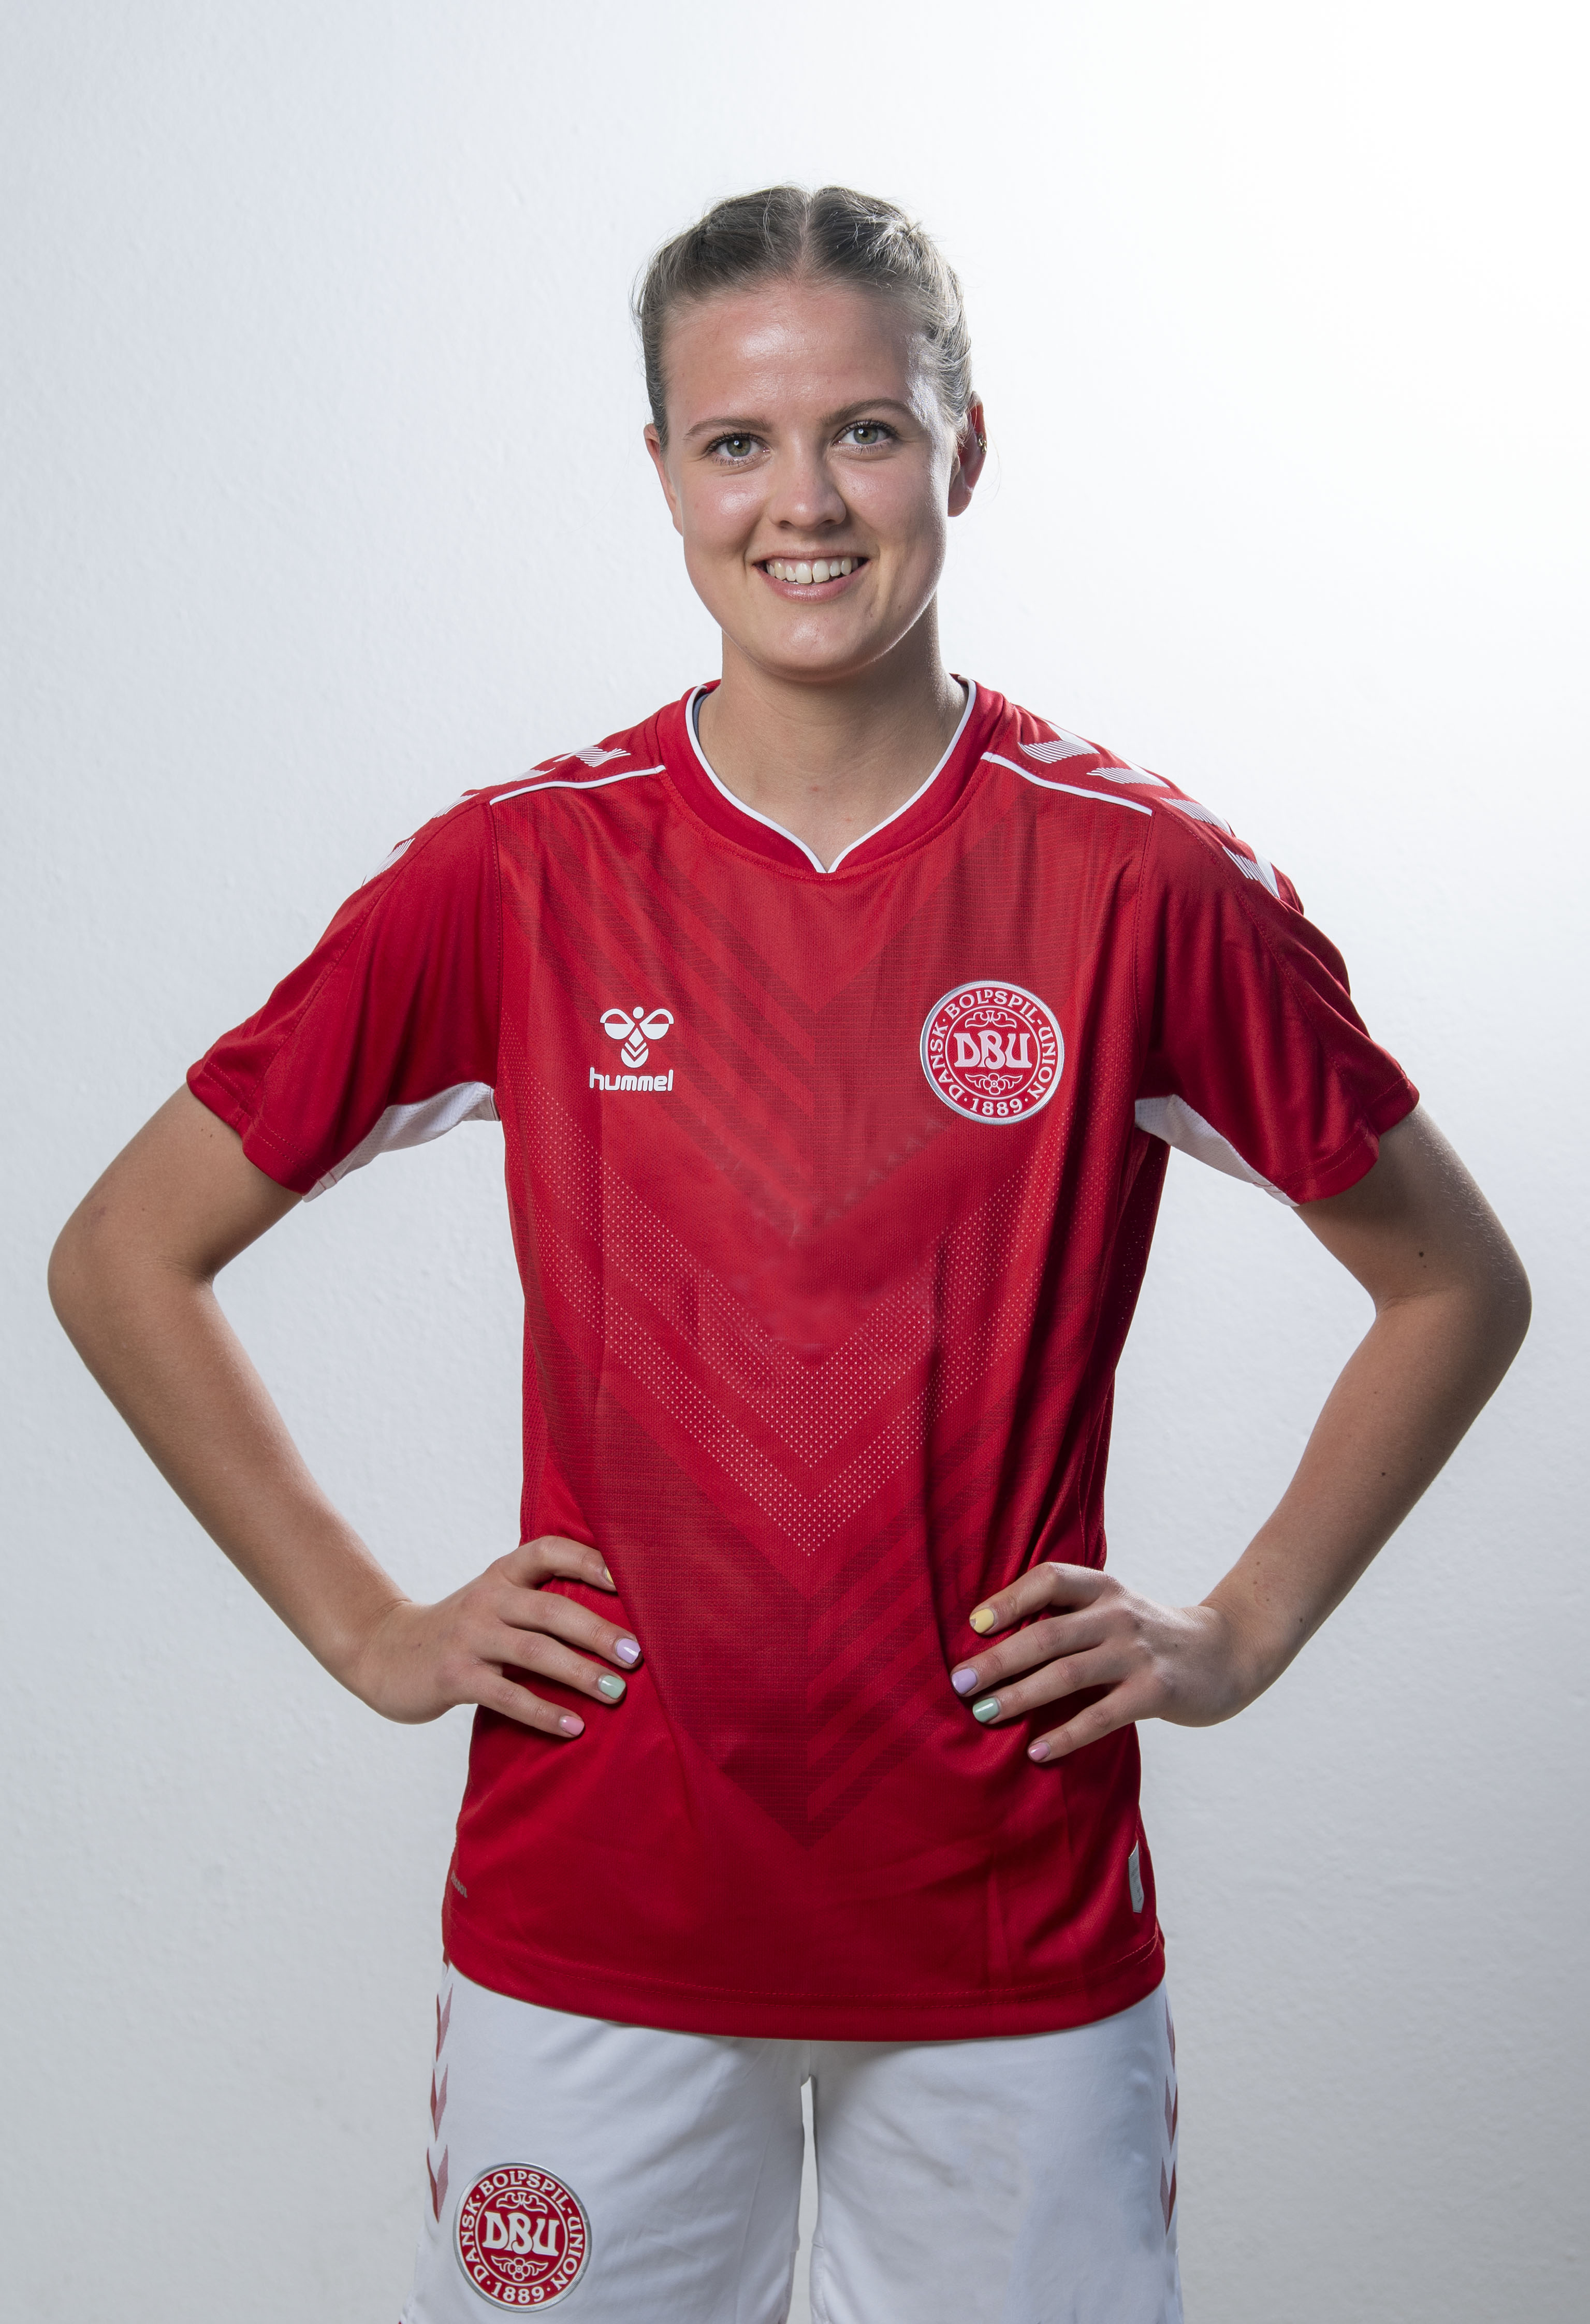 Caroline Møller